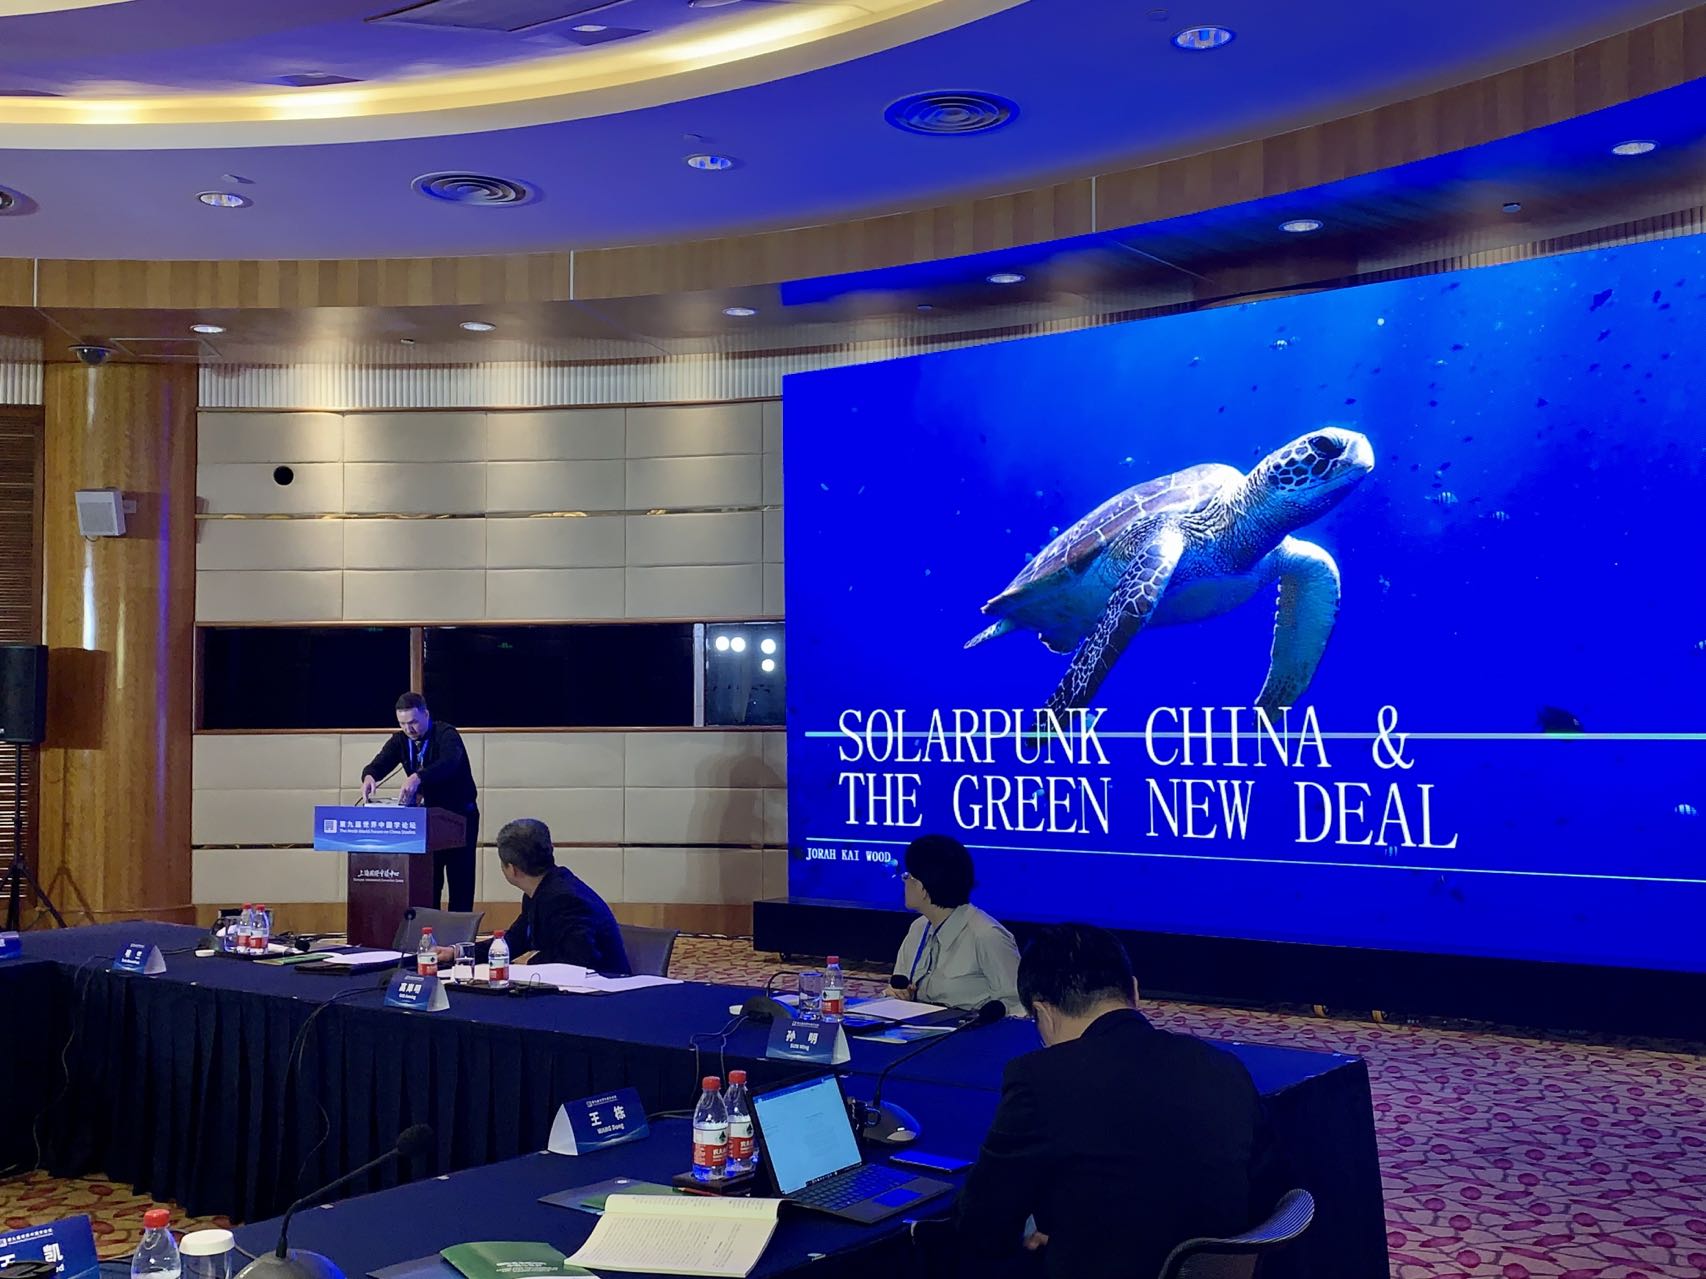 Jorah Kai's speech Solar Punk China and the Green New Deal